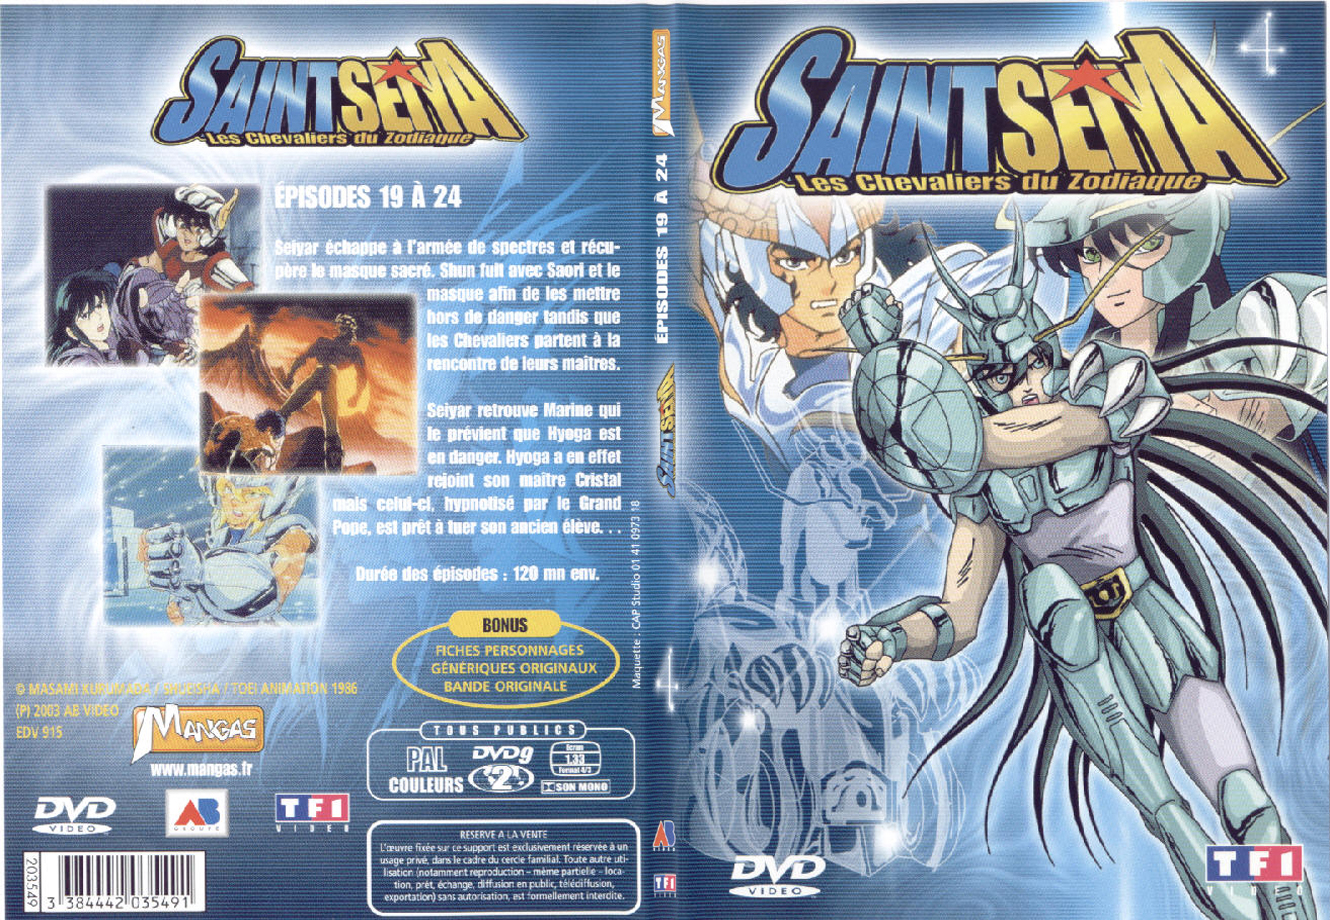 Jaquette DVD Saint Seiya vol 04 - SLIM